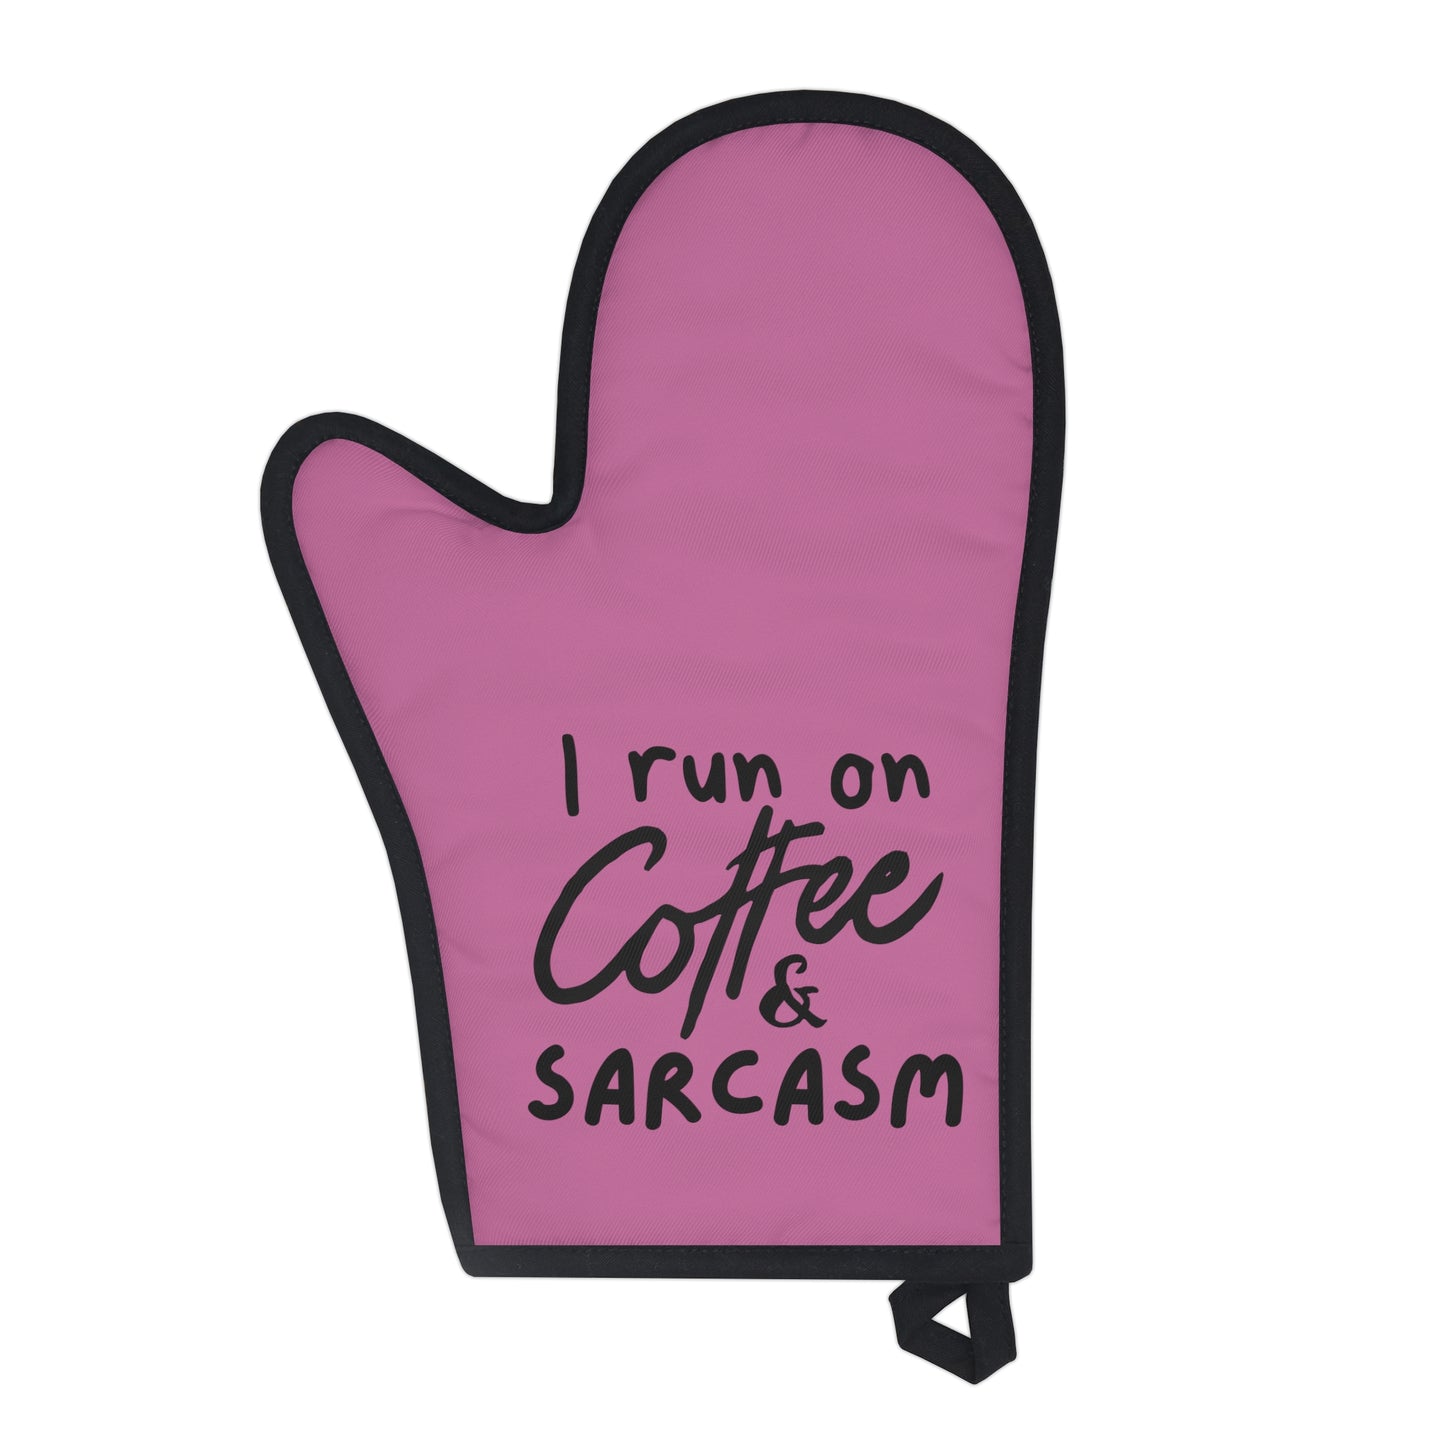 I Run on Coffee & Sarcasm Pink Oven Glove